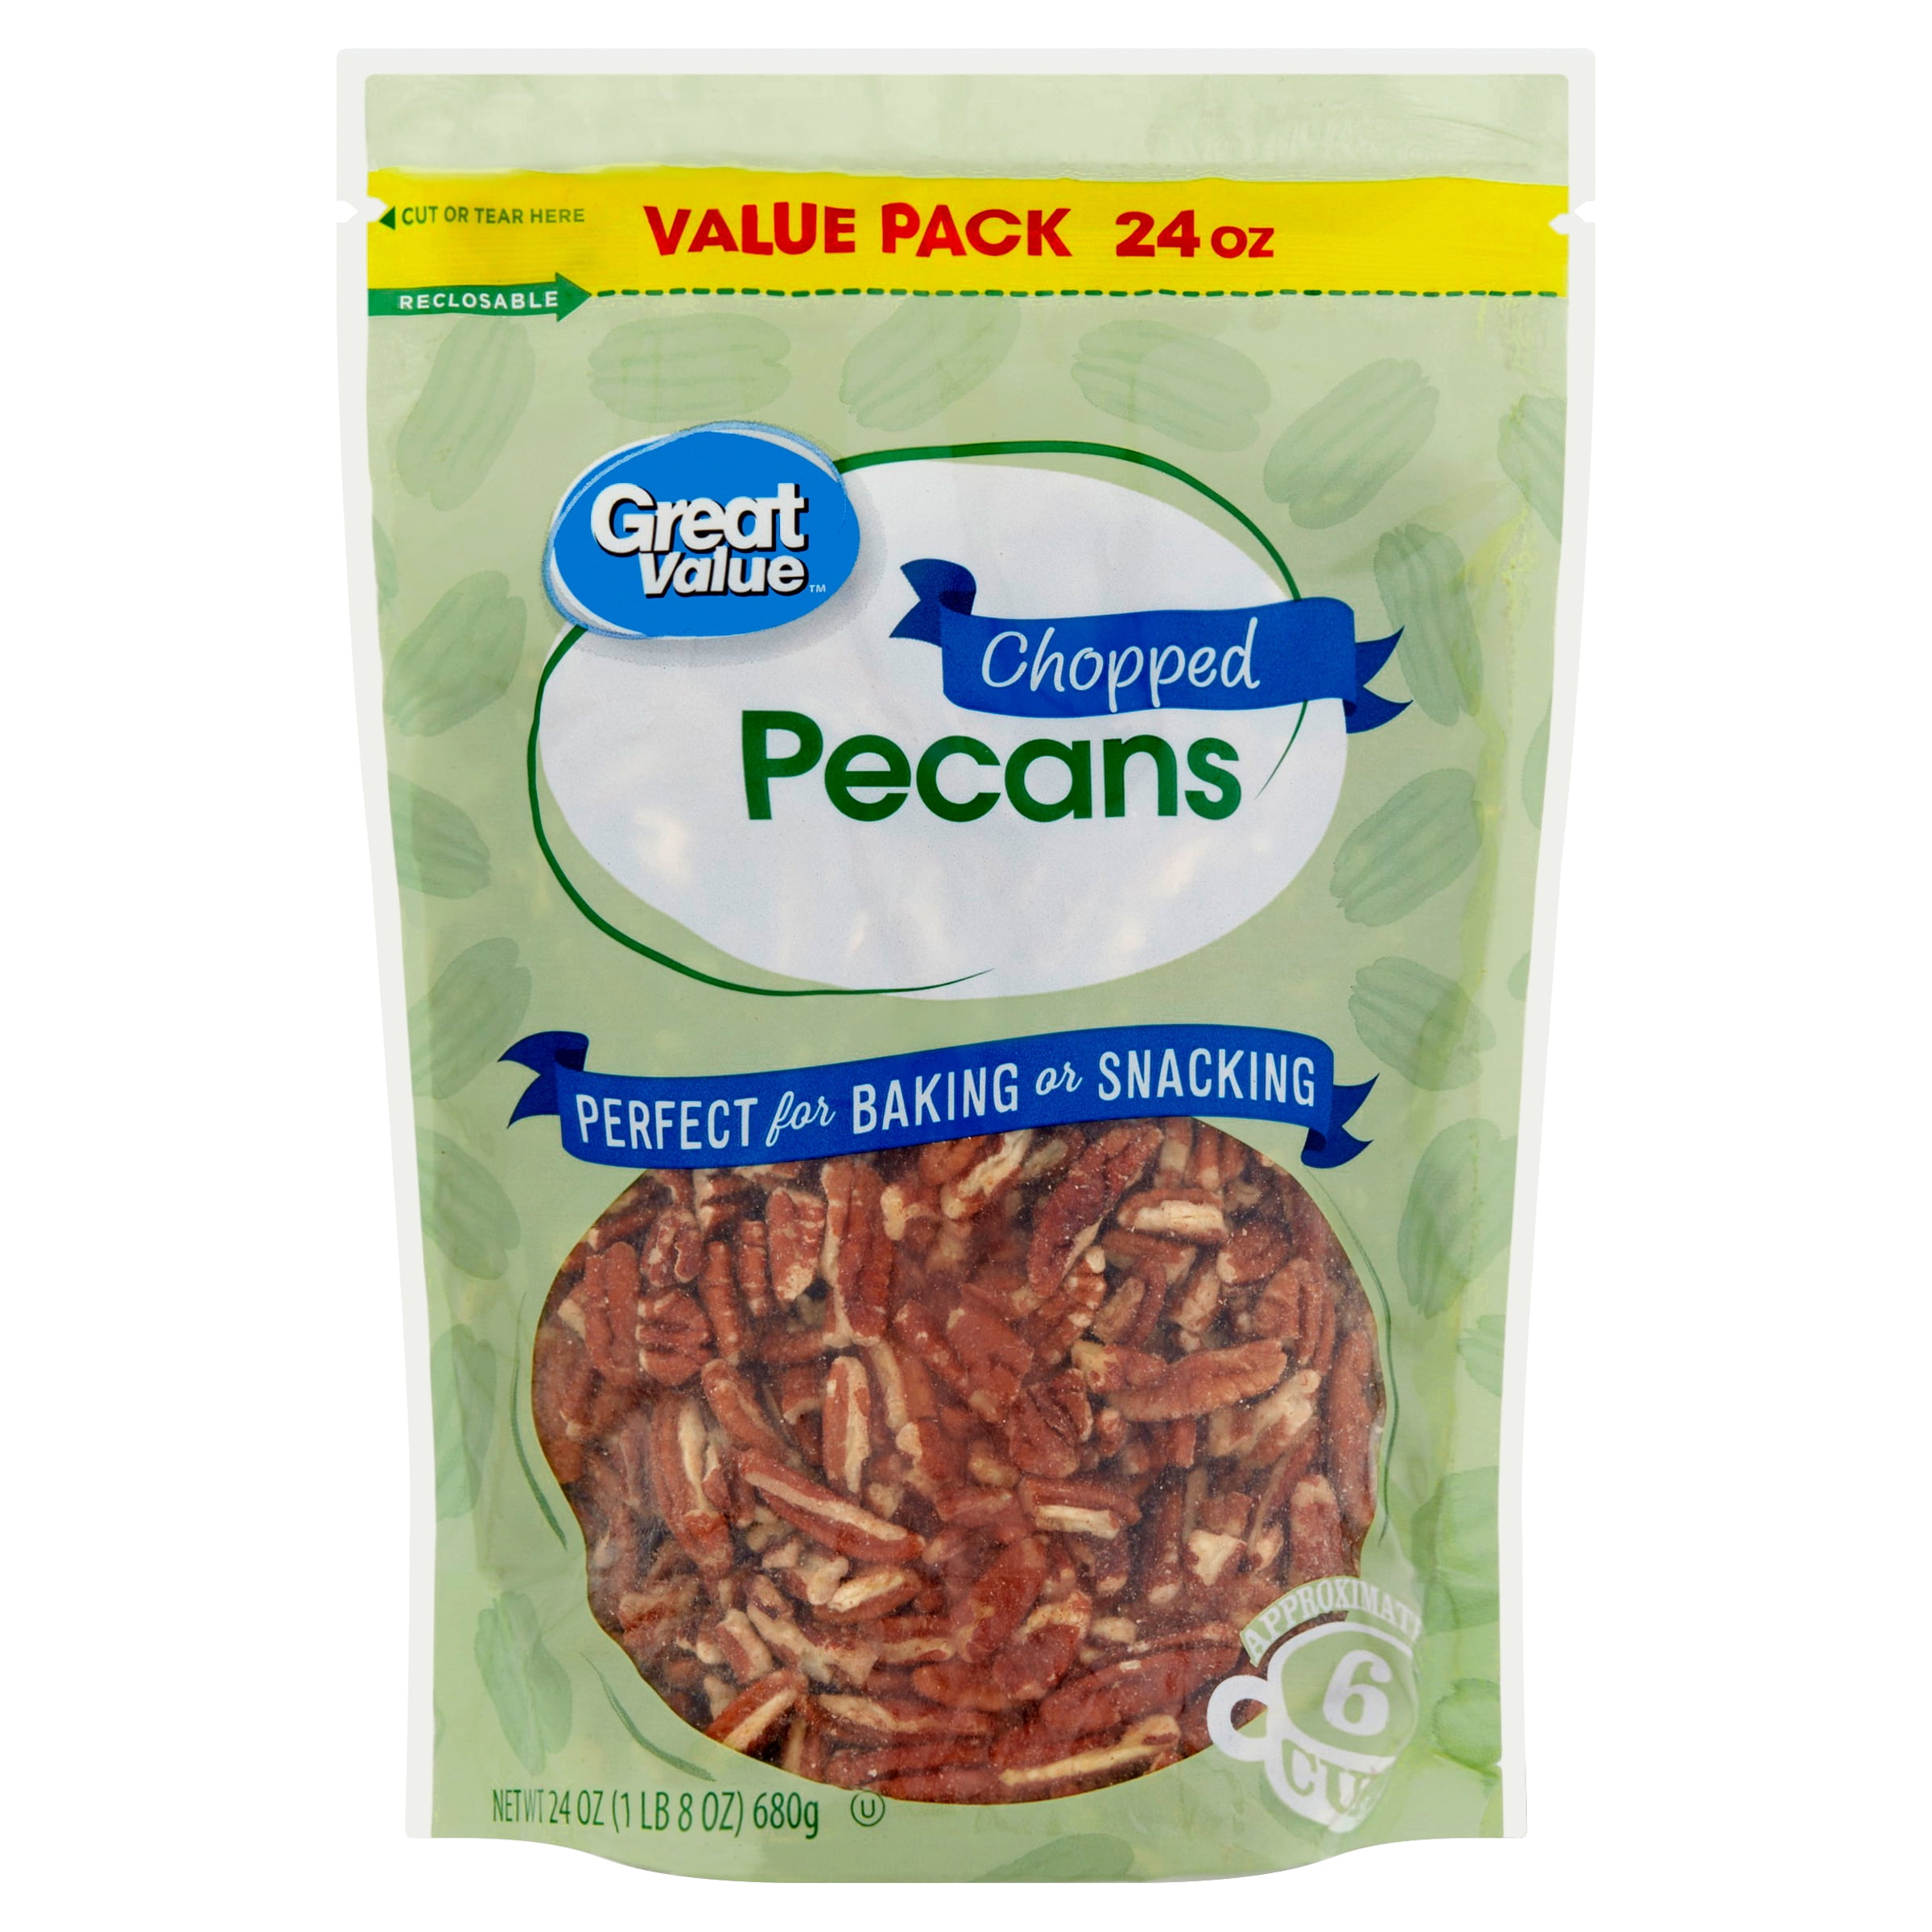 Great Value Chopped Pecans 24 oz Bag